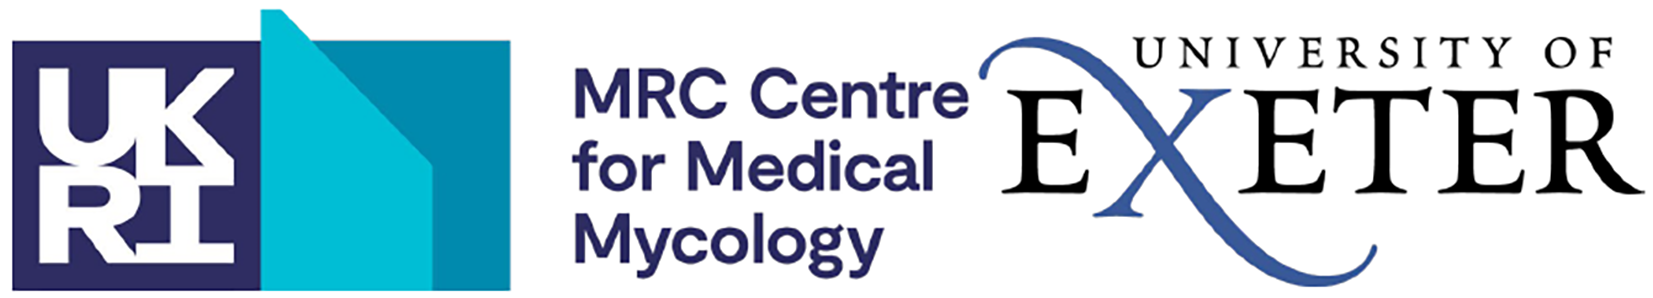 MRC Centre for Medical Mycology